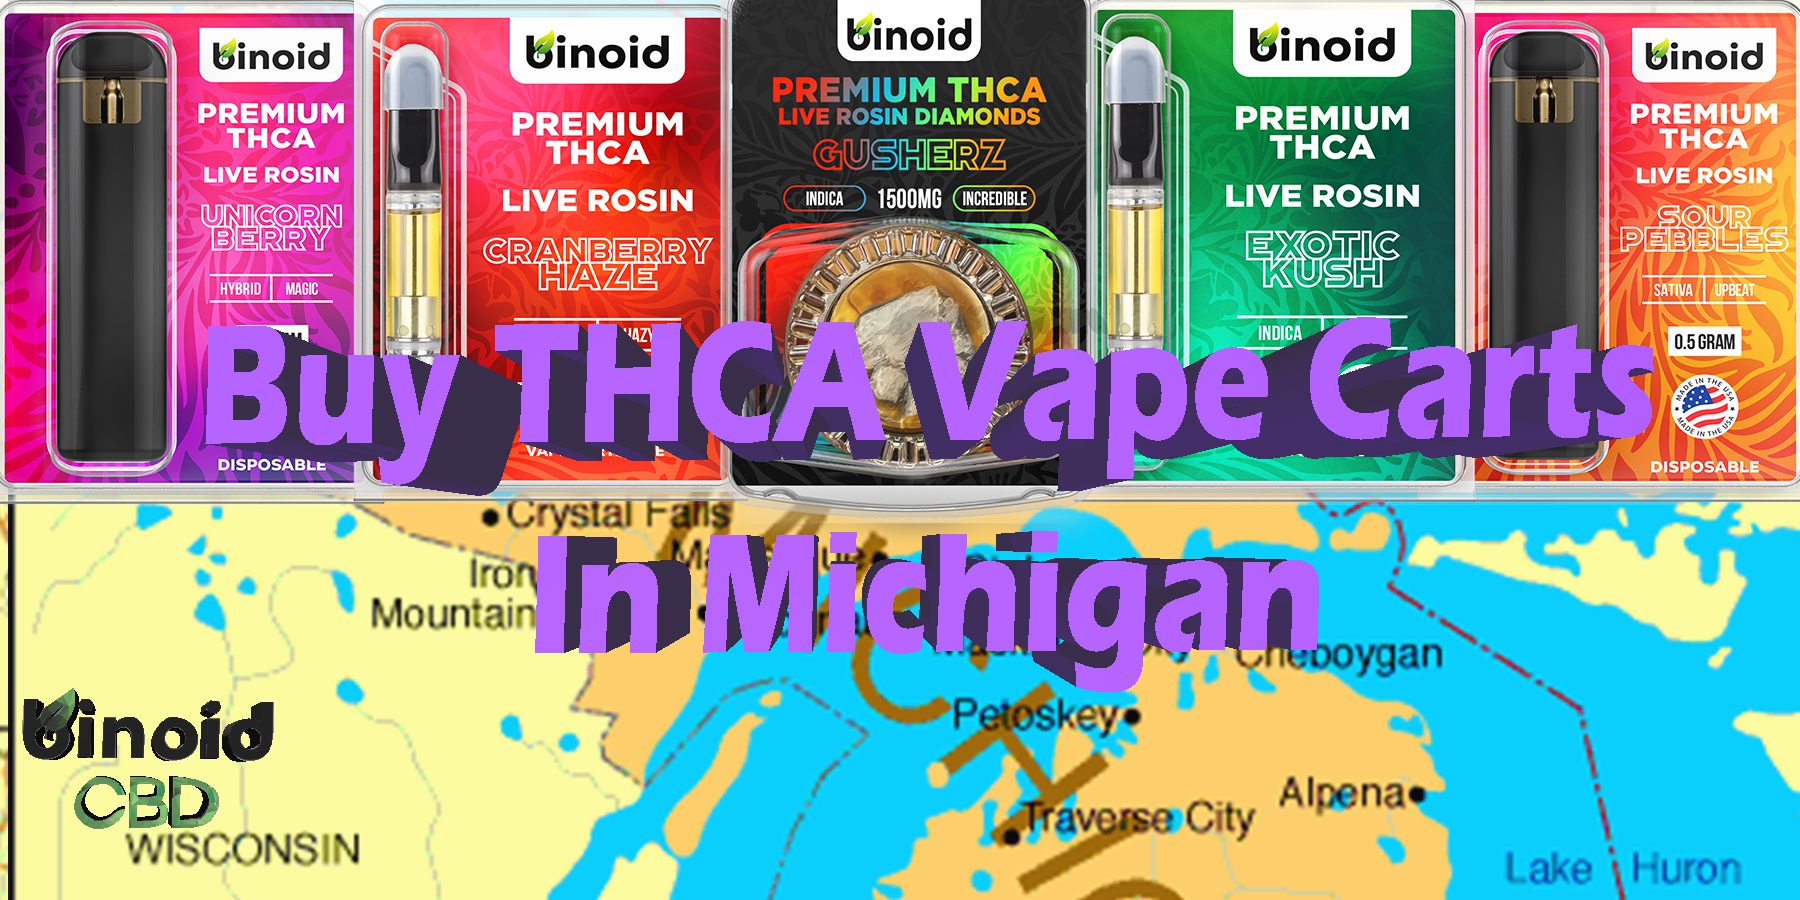 Buy THCA Vape Cartridges Carts Michigan Get Online Near Me For Sale Best Brand Strongest Real Legal Store Shop Reddit